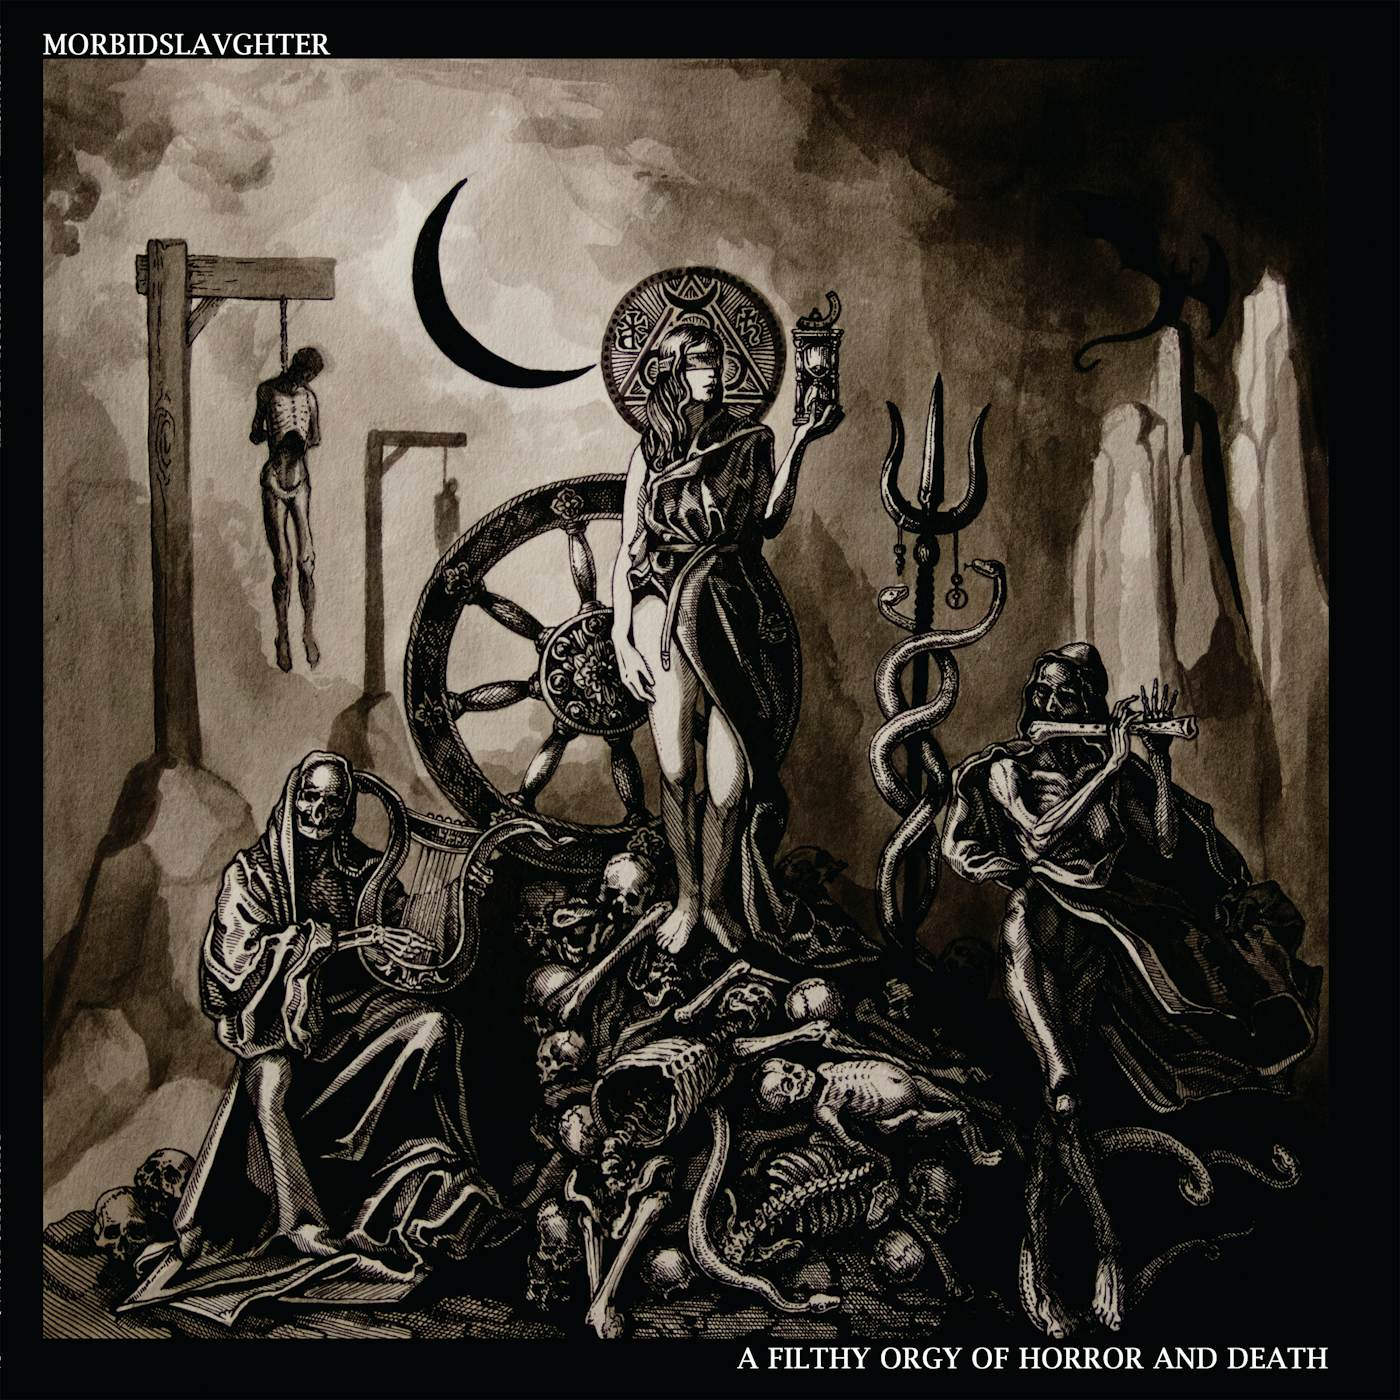 Morbid Slaughter FILTHY ORGY OF HORROR & DEATH Vinyl Record